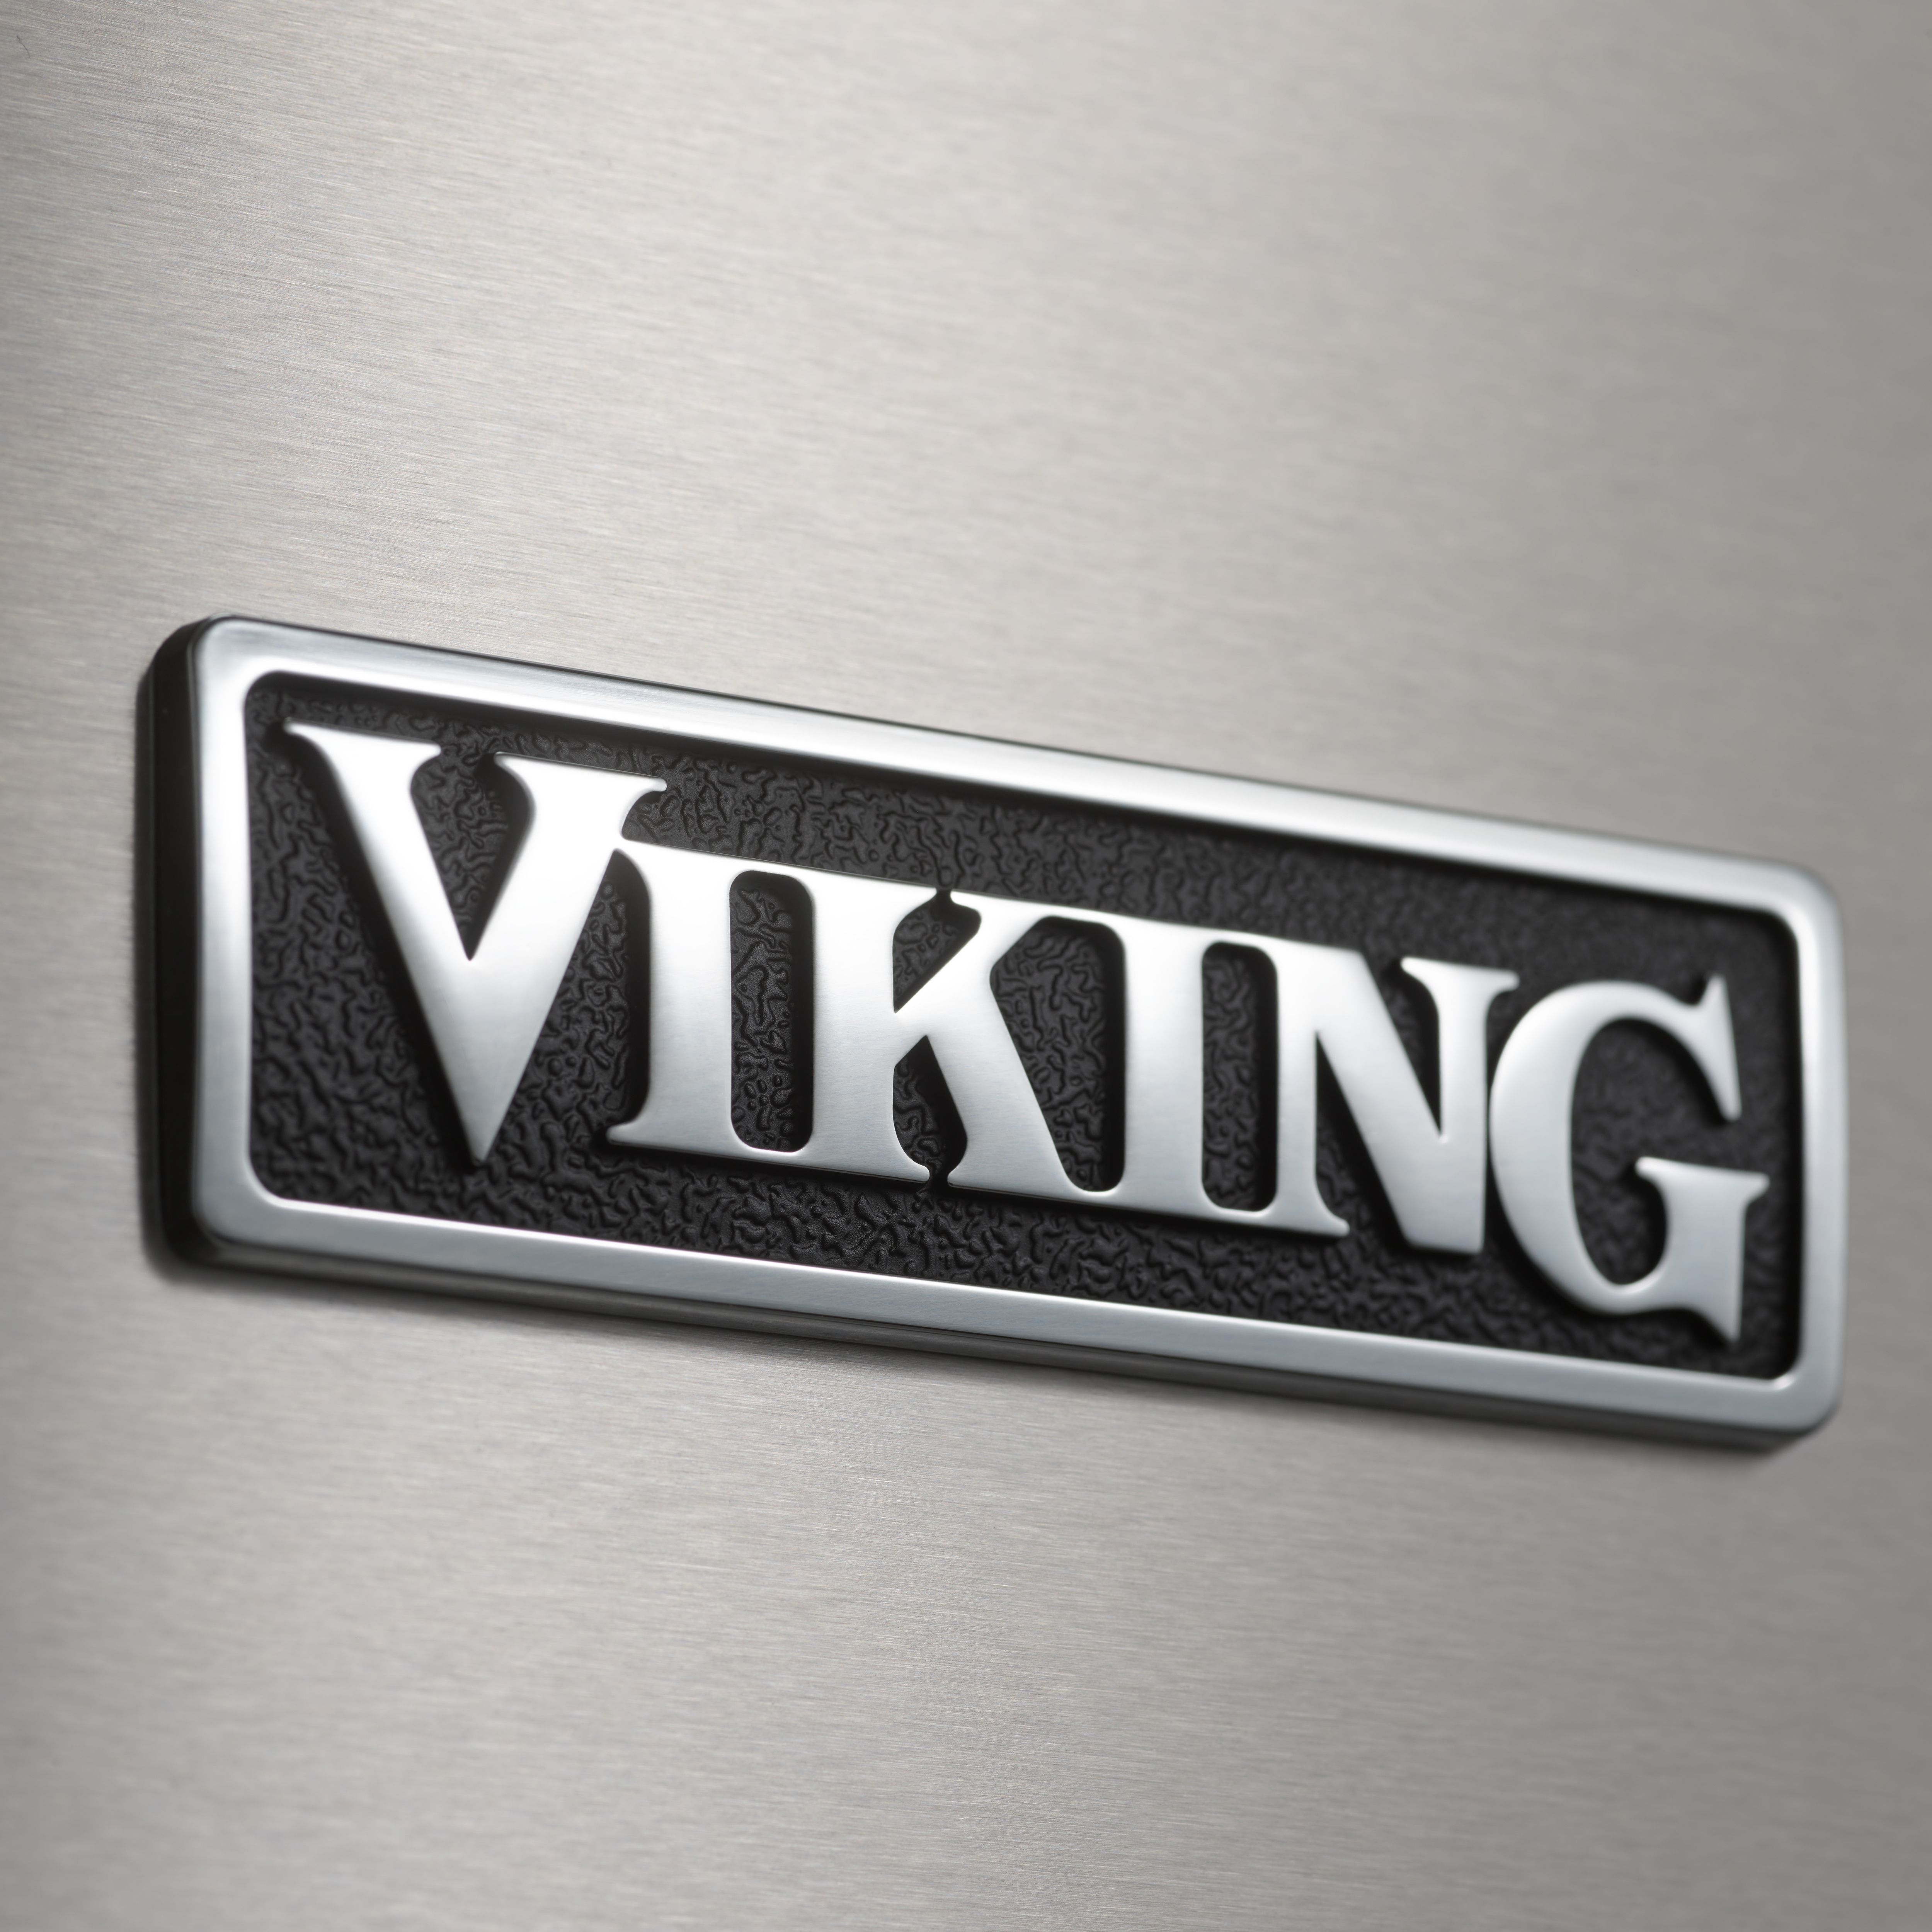 1953 Quincy Jones Refreshed With Viking Appliances - Viking Range, LLC